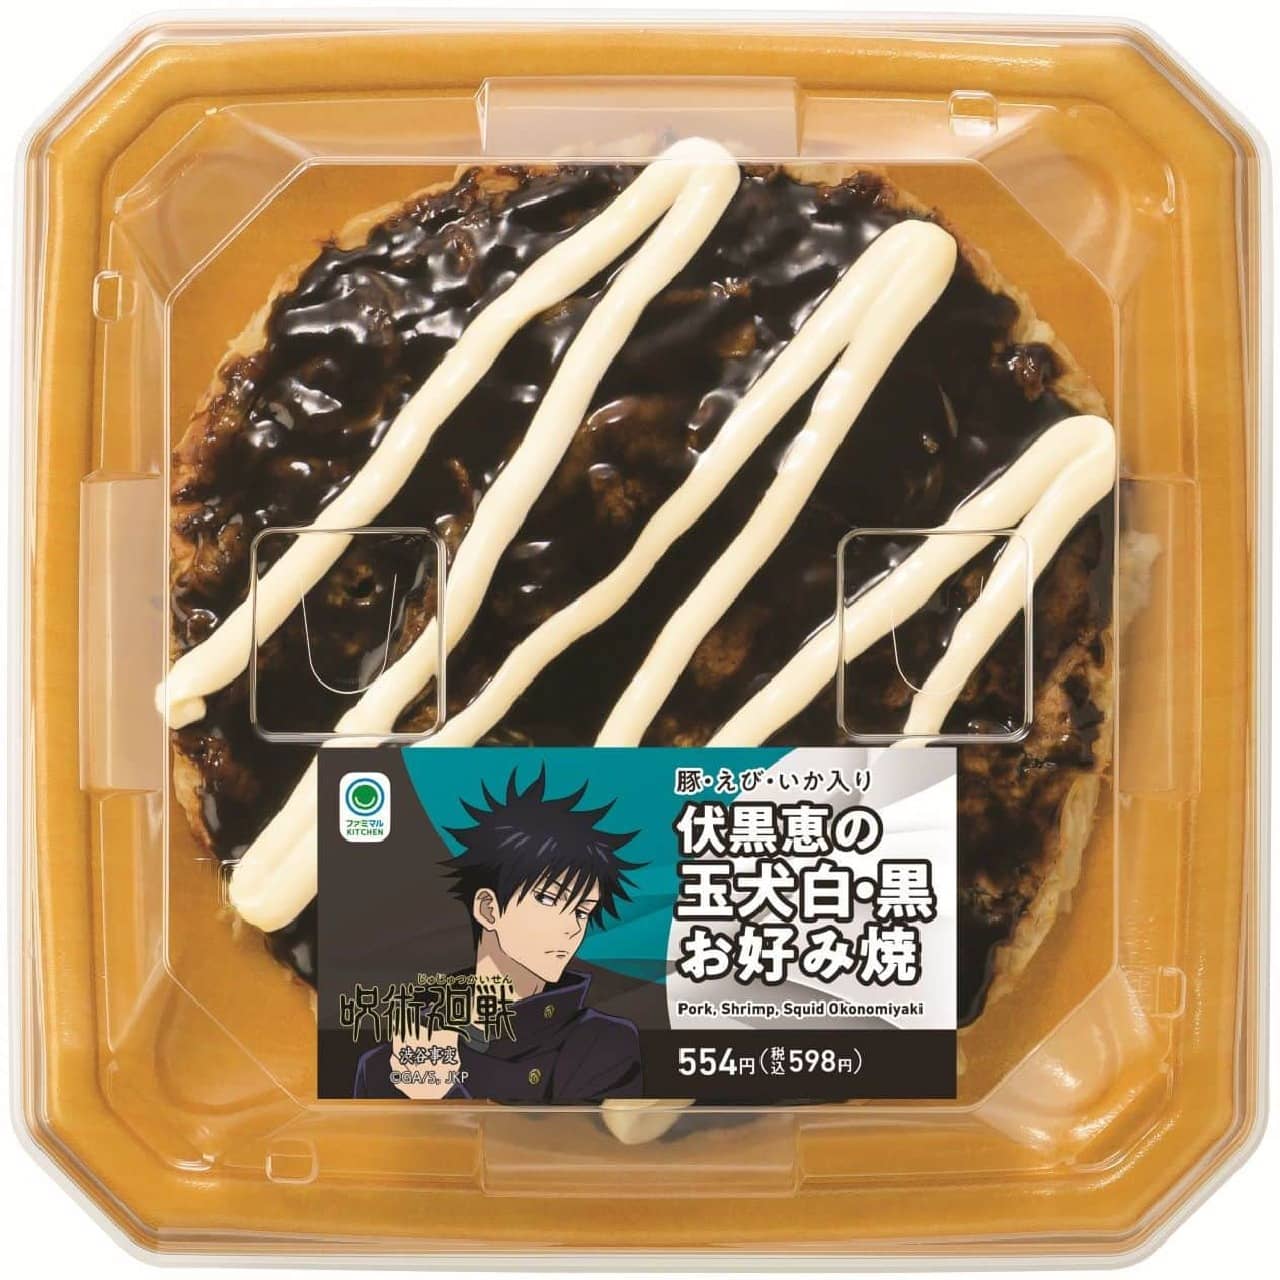 FamilyMart "Fushikuro Megumi no Tamanu White and Black Okonomiyaki".